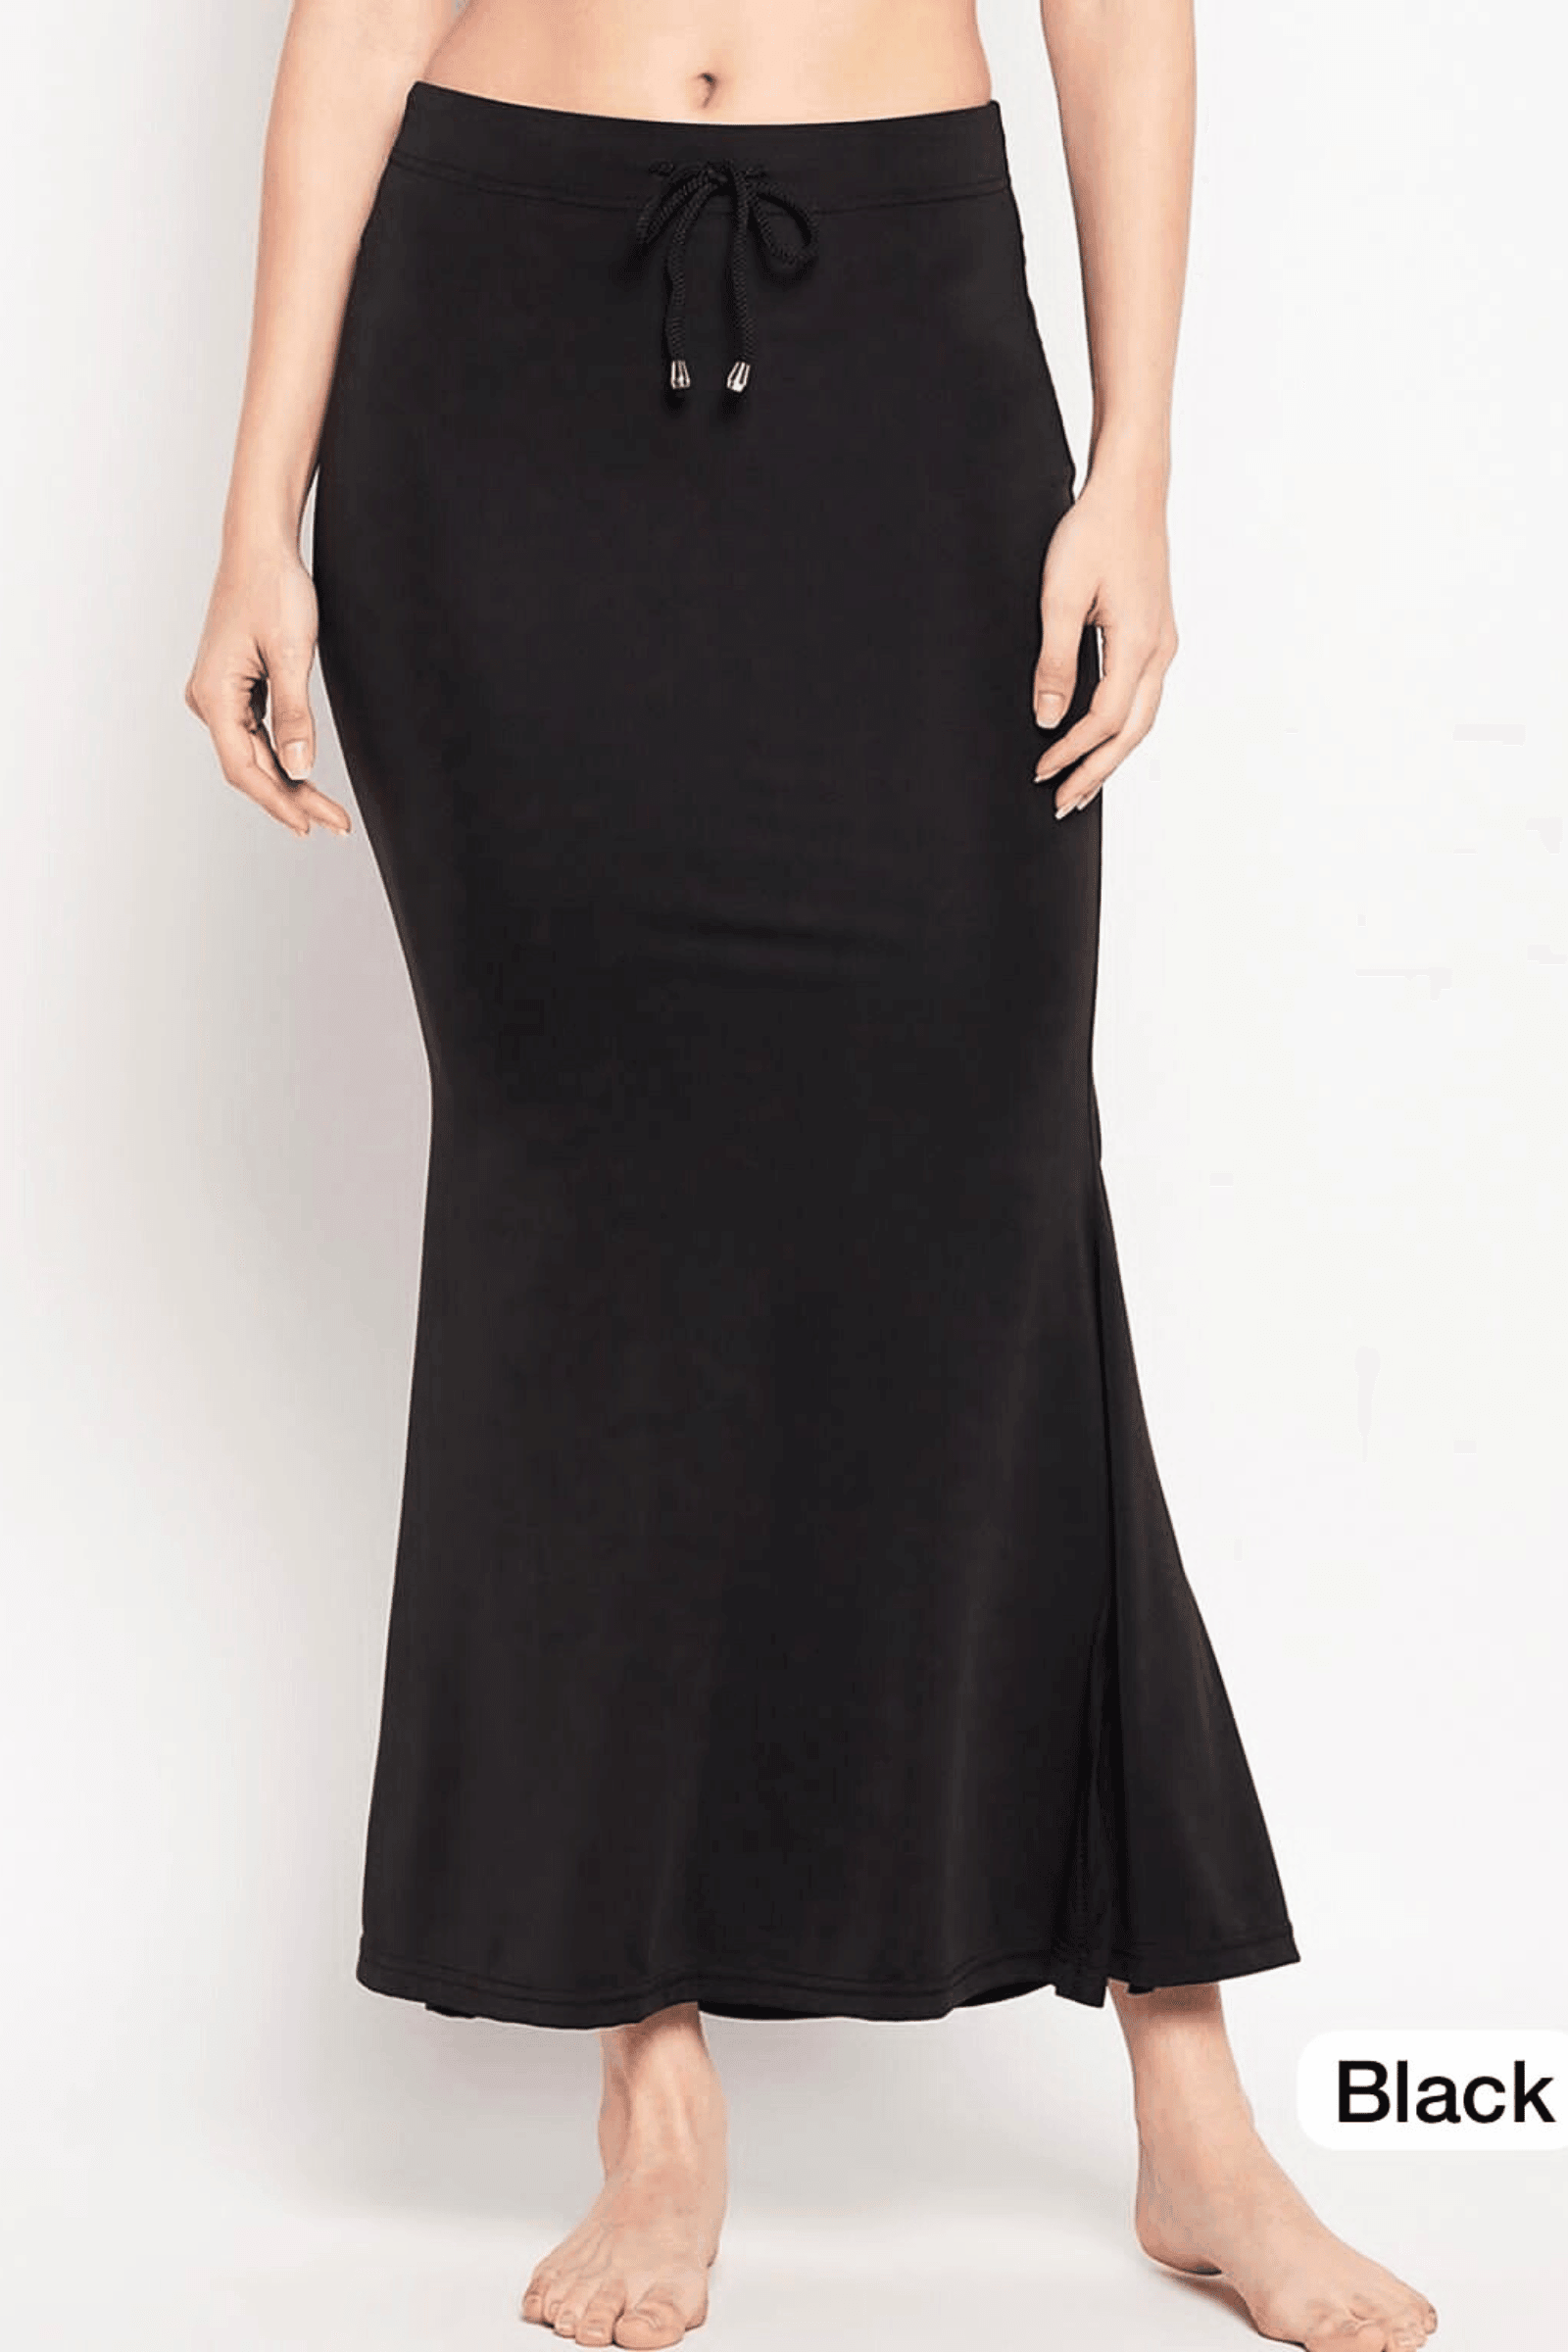 Glamwiz Slim Fit Saree Shapewear - Black – Glamwiz India